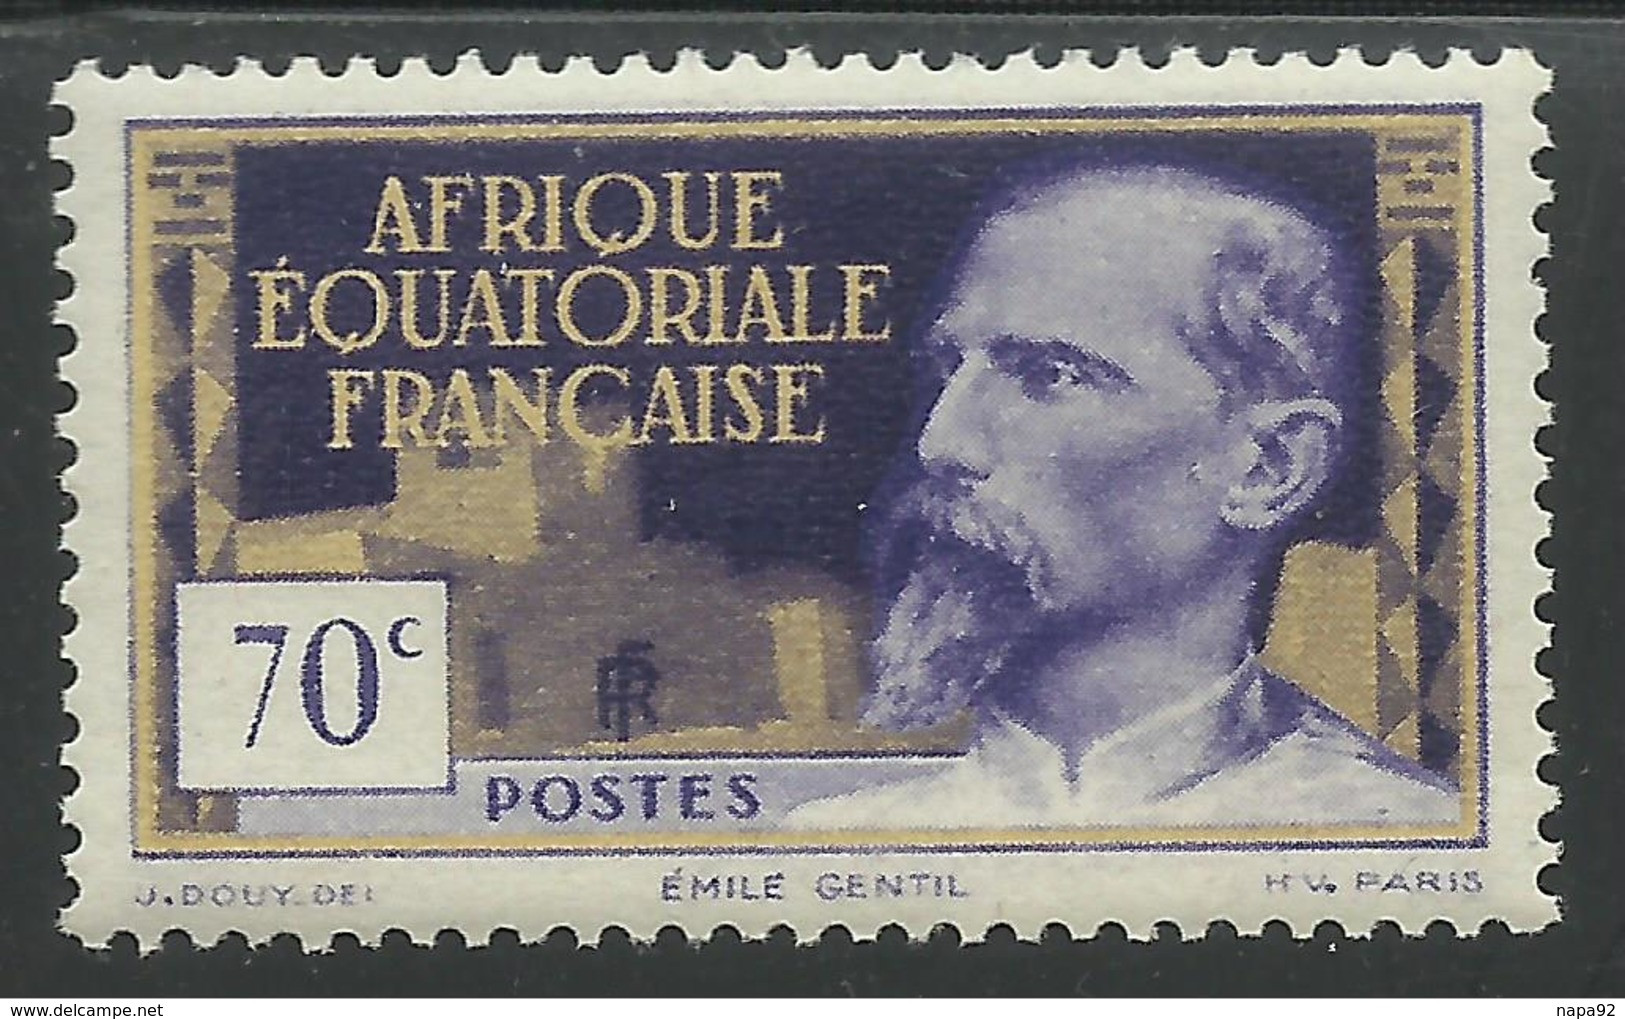 AFRIQUE EQUATORIALE FRANCAISE - AEF - A.E.F. - 1940 - YT 81 MNH - Unused Stamps